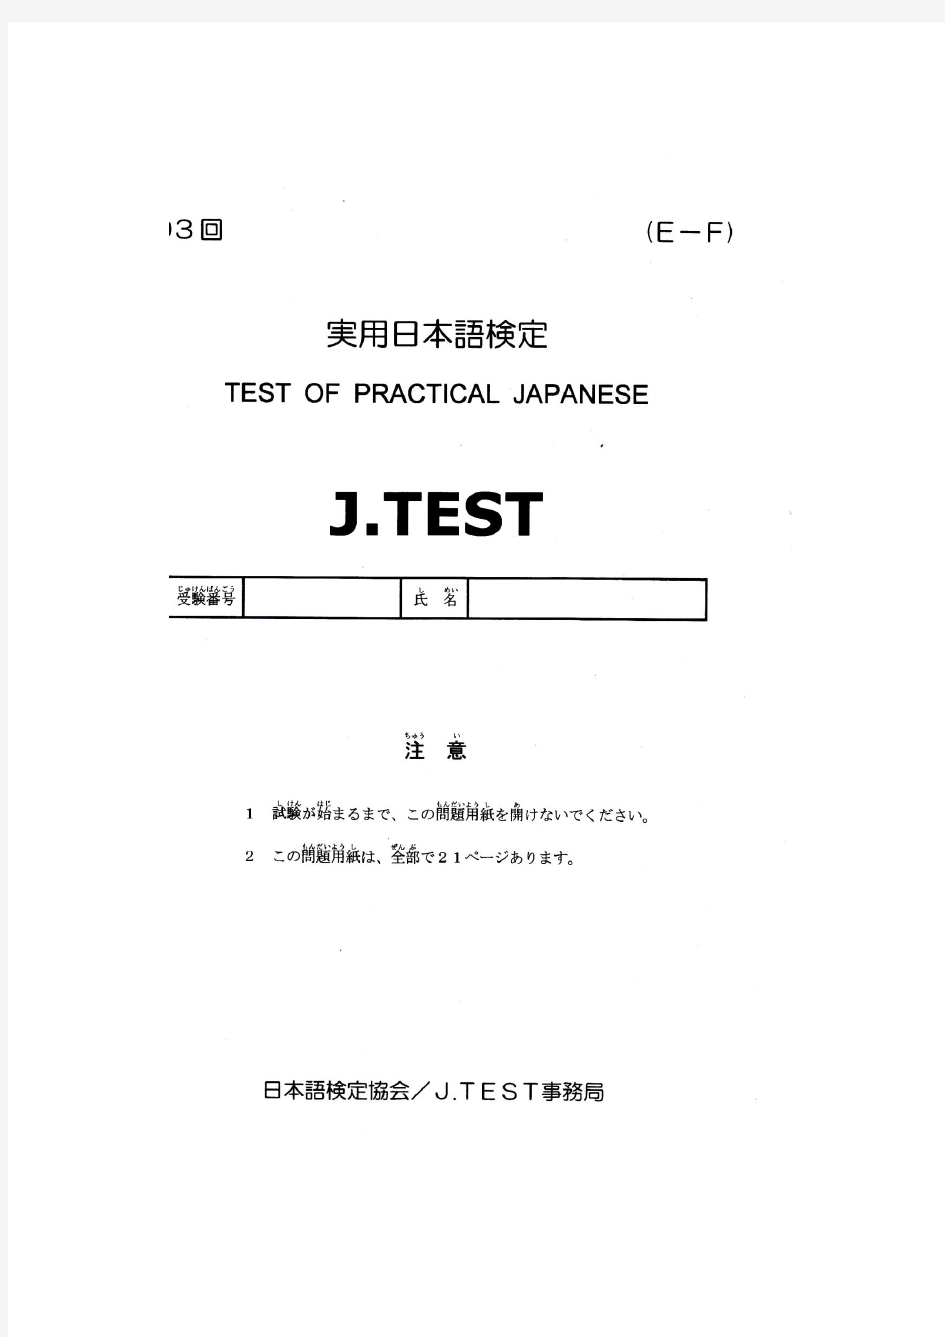 2010年93回JTEST考试题目